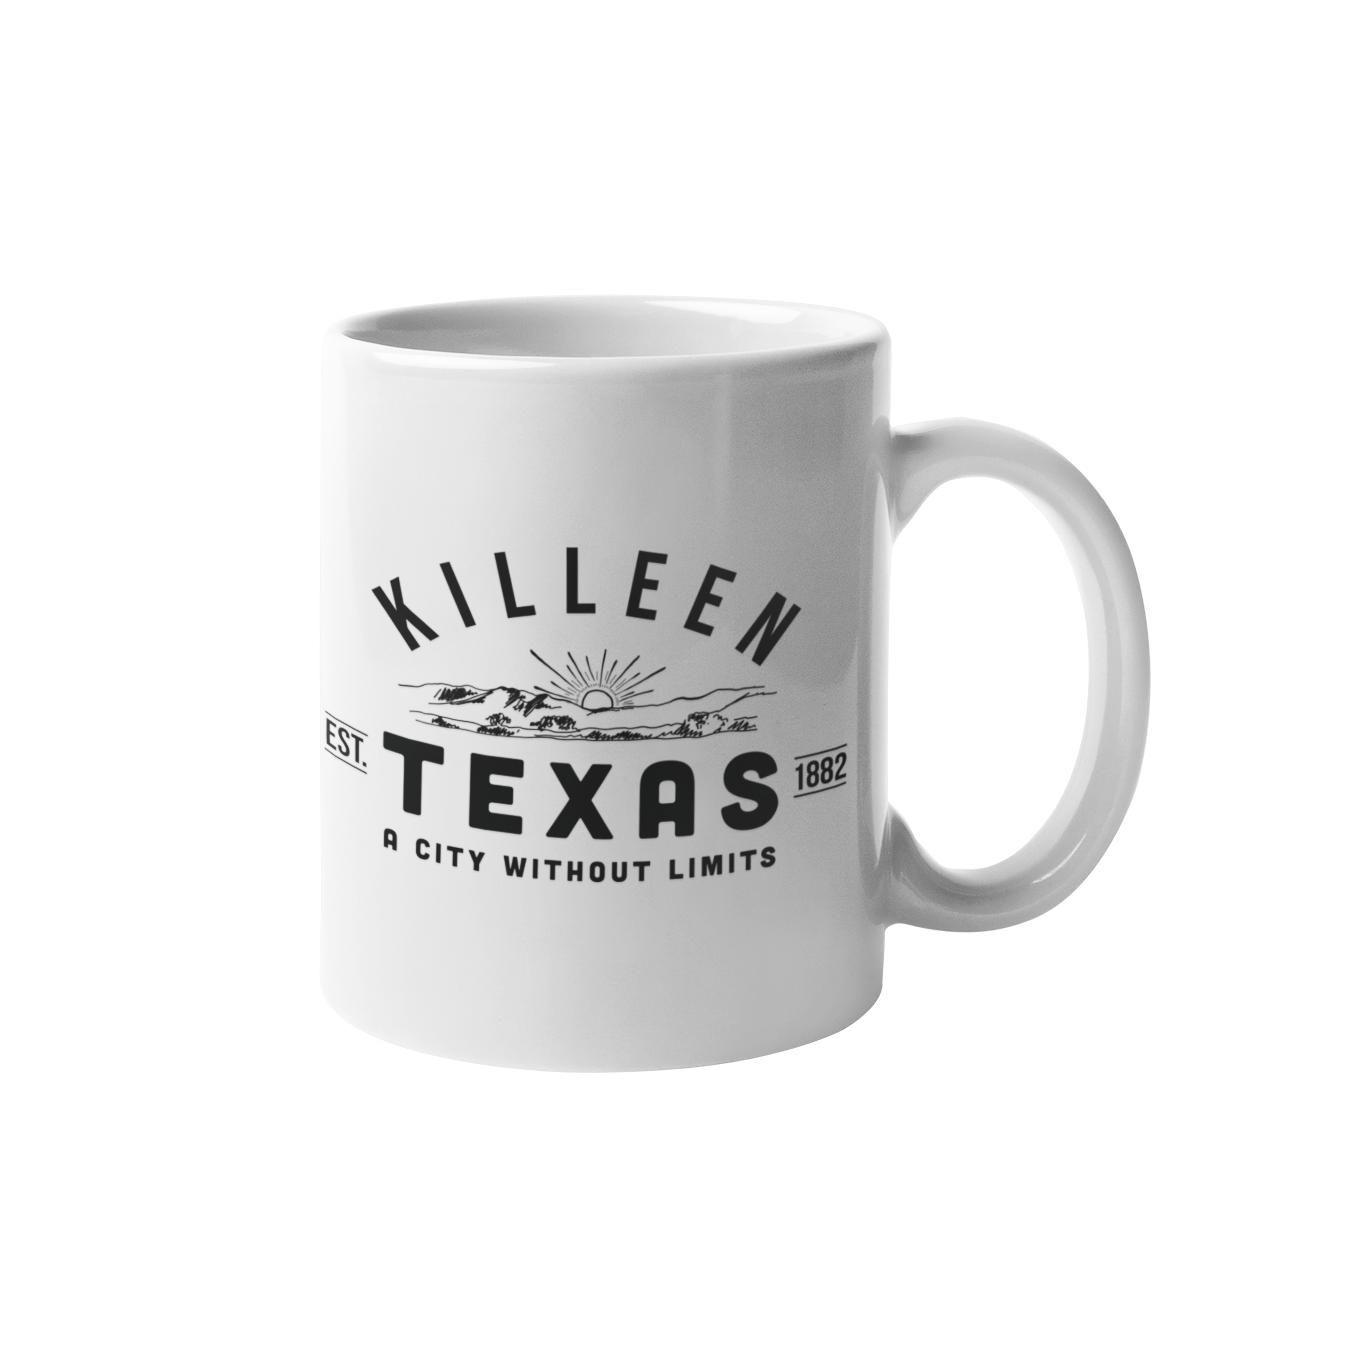 Killeen Texas Mug -Without Limits